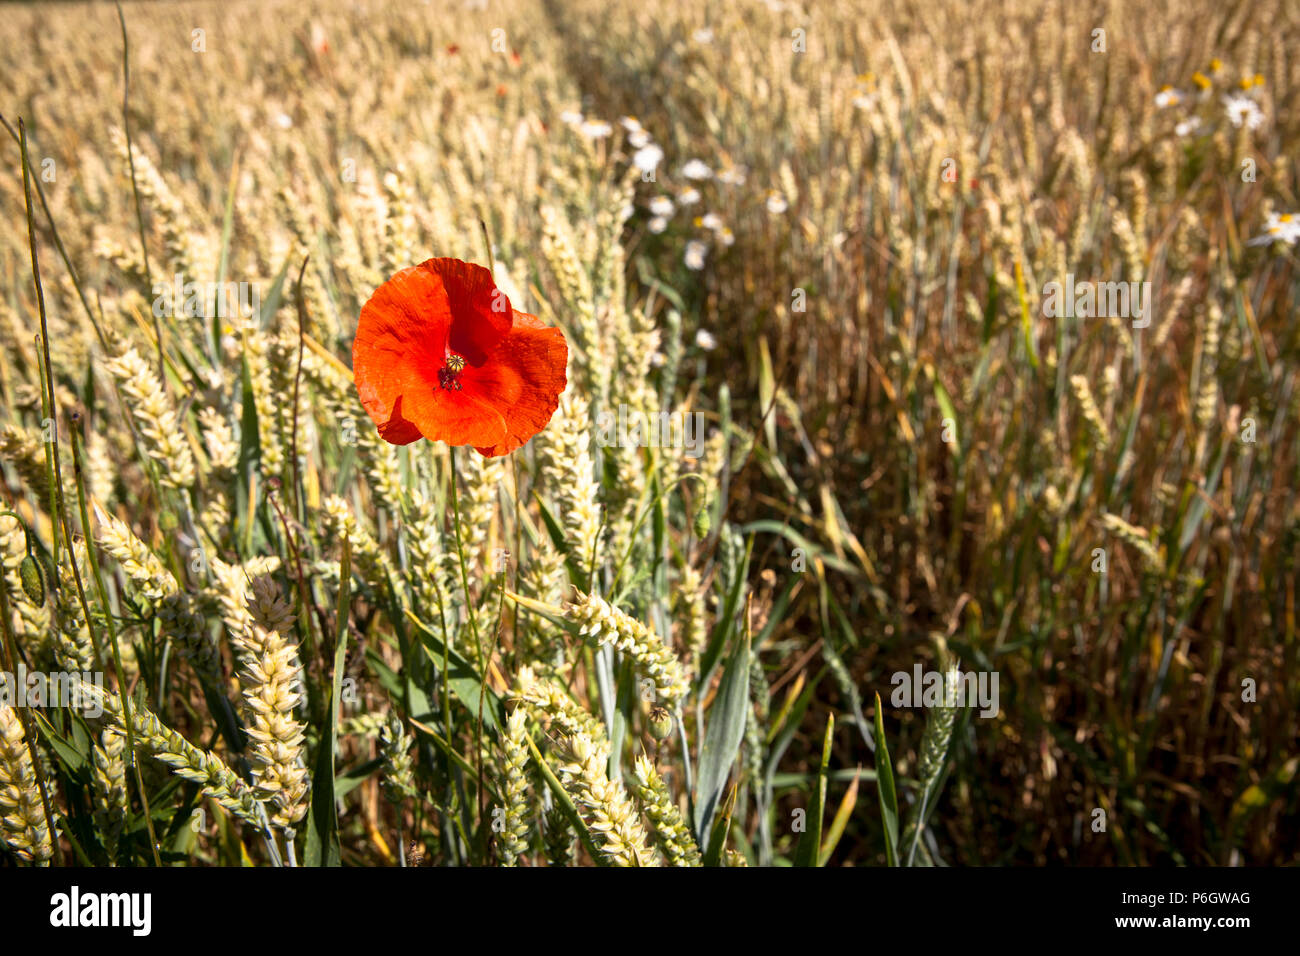 Germania, fiore di papavero in un cornfield, frumento. Deutschland, Mohnbluete in einem Weizenfeld. Foto Stock